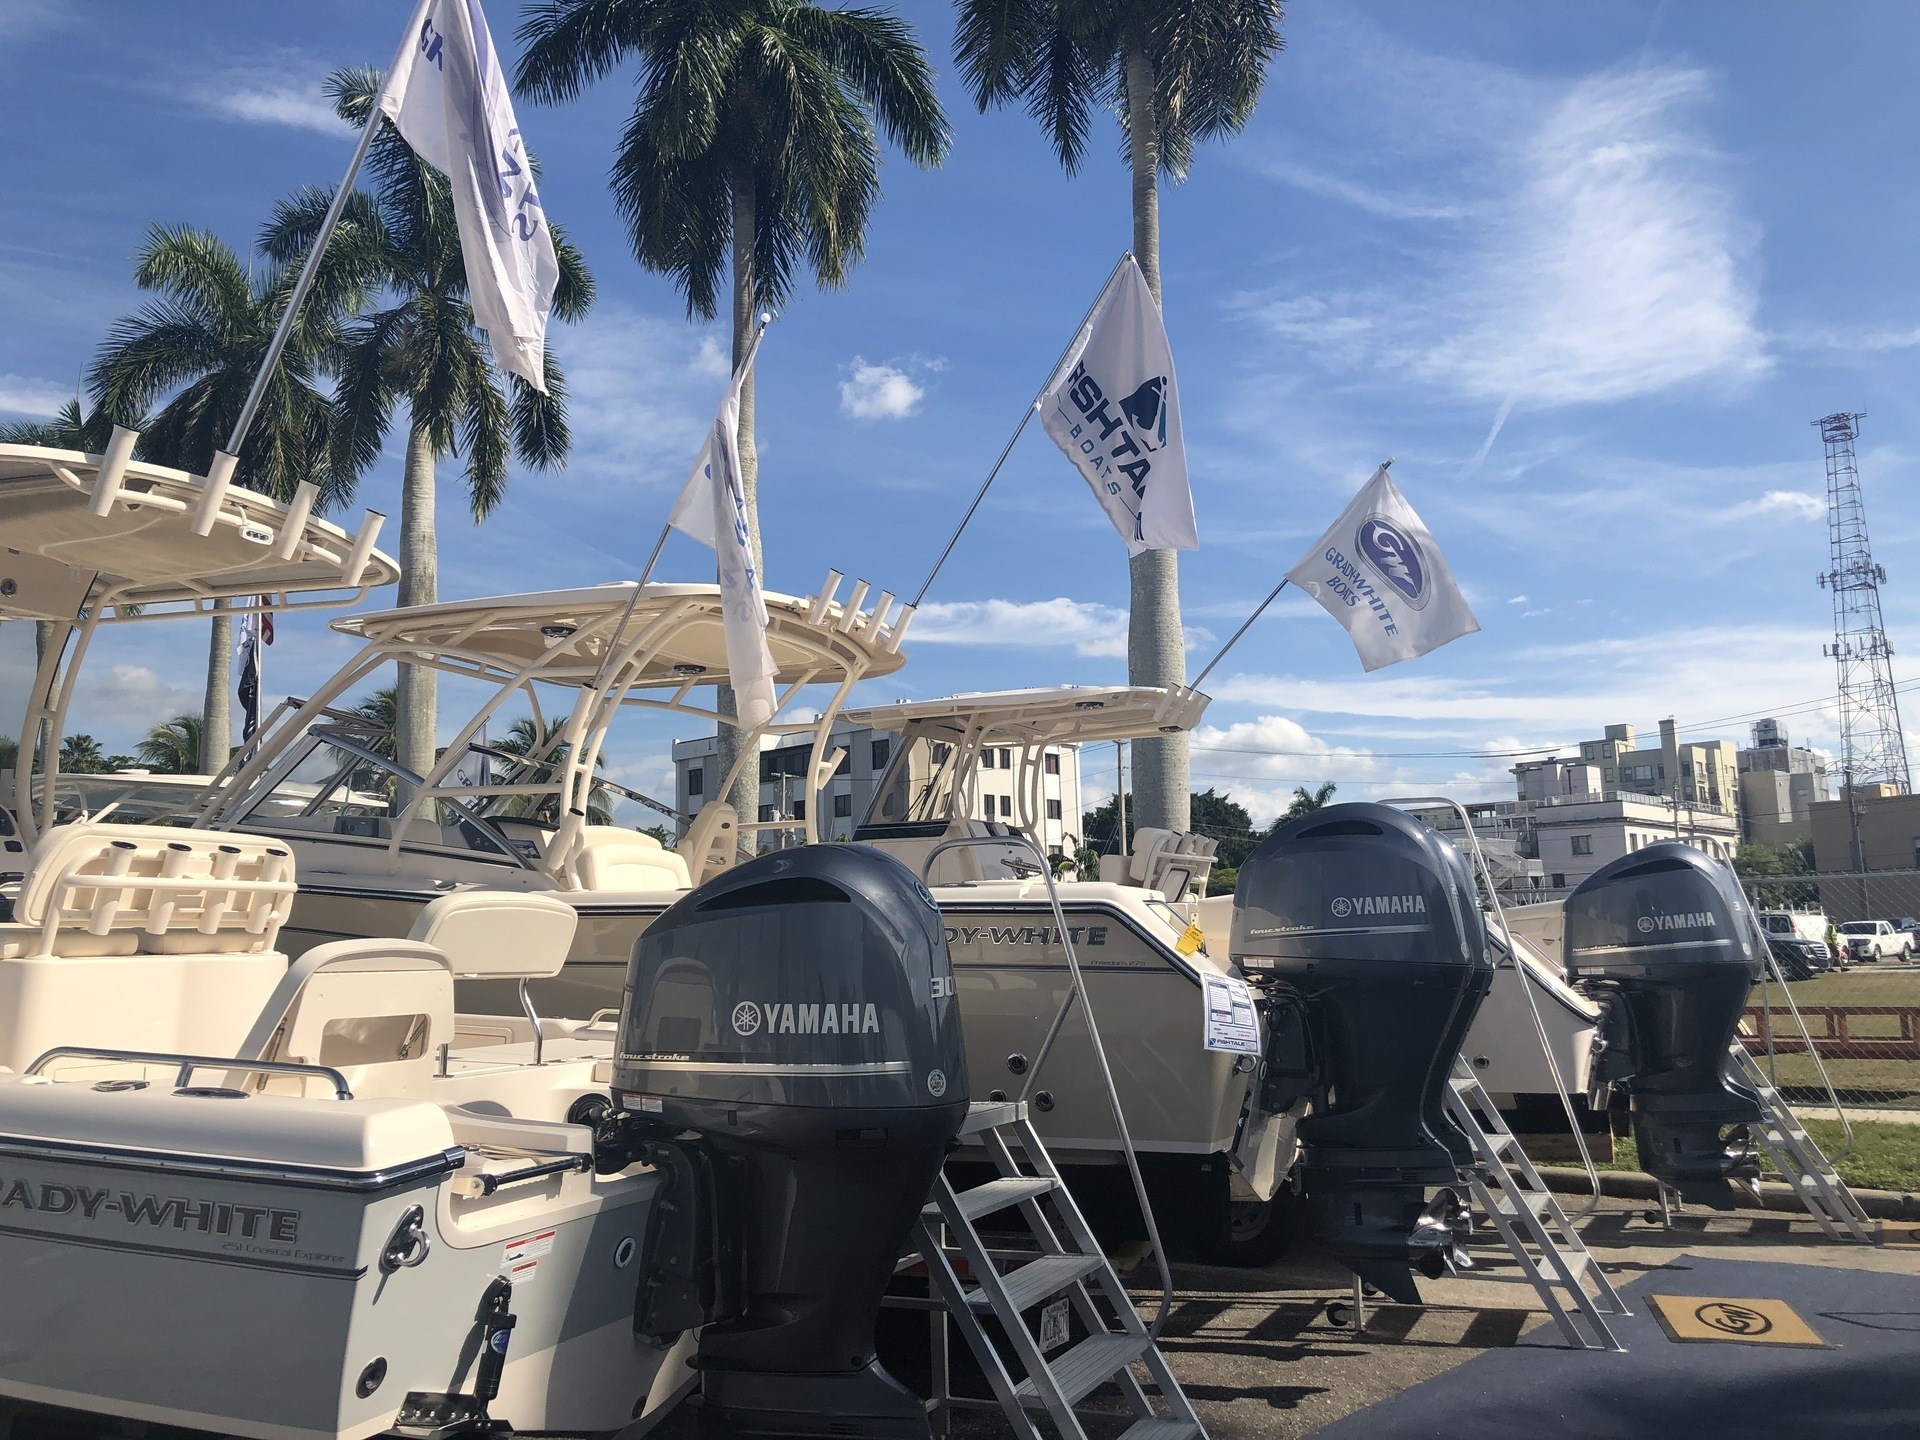 2019 Fort Myers Boat Show Recap